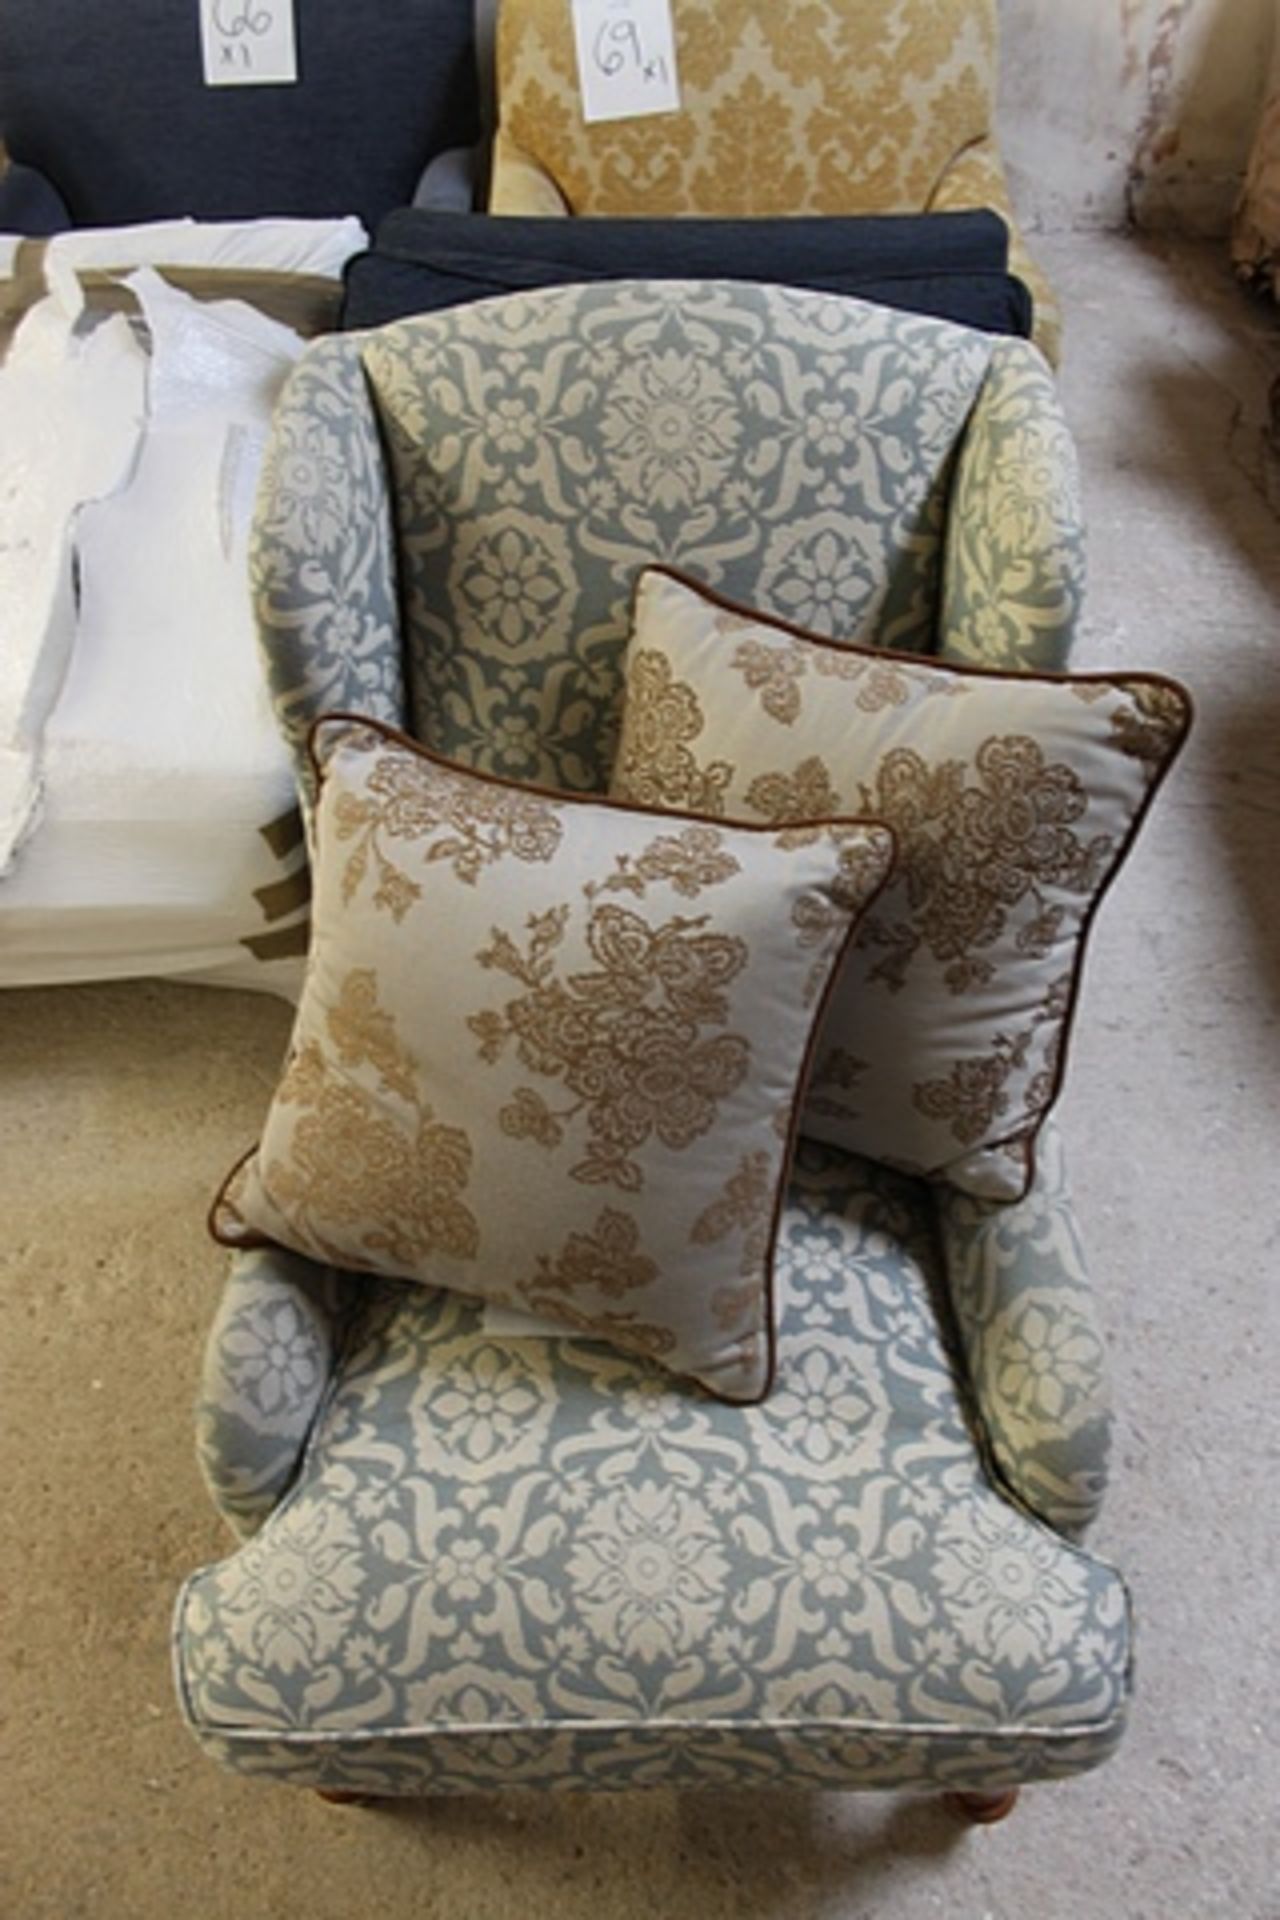 6 x 440mm x 440mm Josephine Home cushions gold pattern